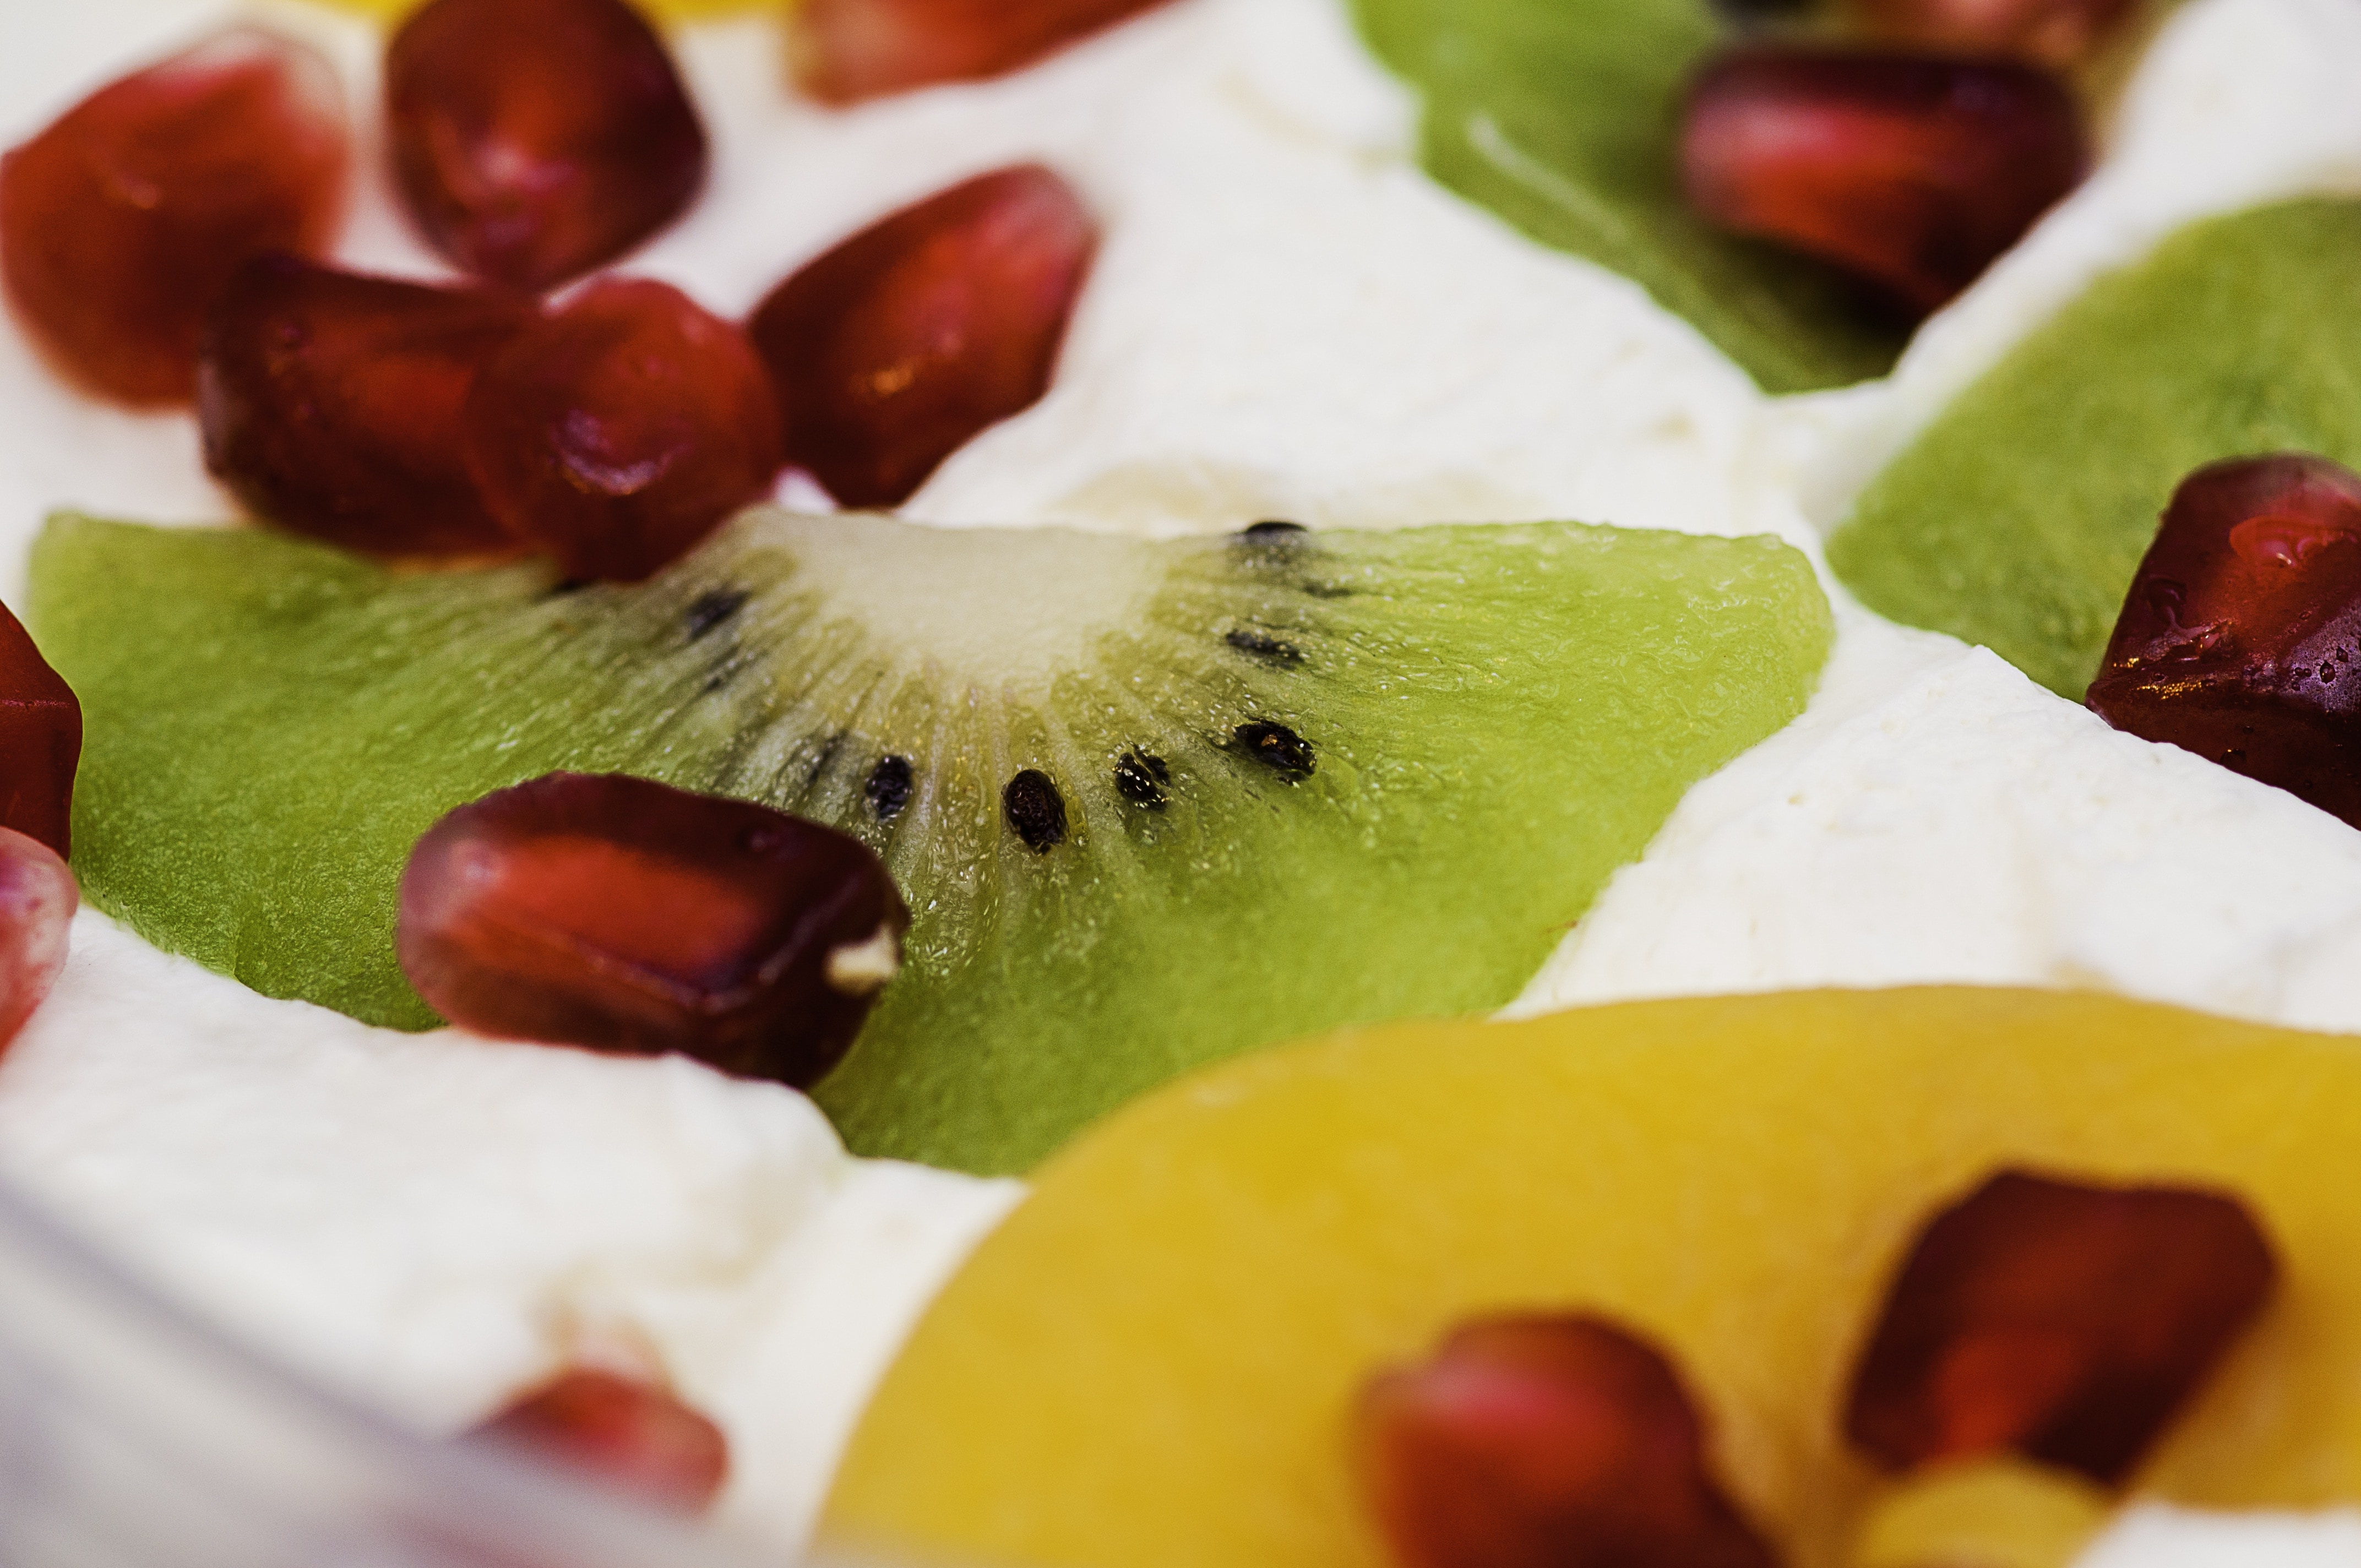 Pomegranate, Fruit, Food, Yoghurt, Kiwi, food and drink, close-up